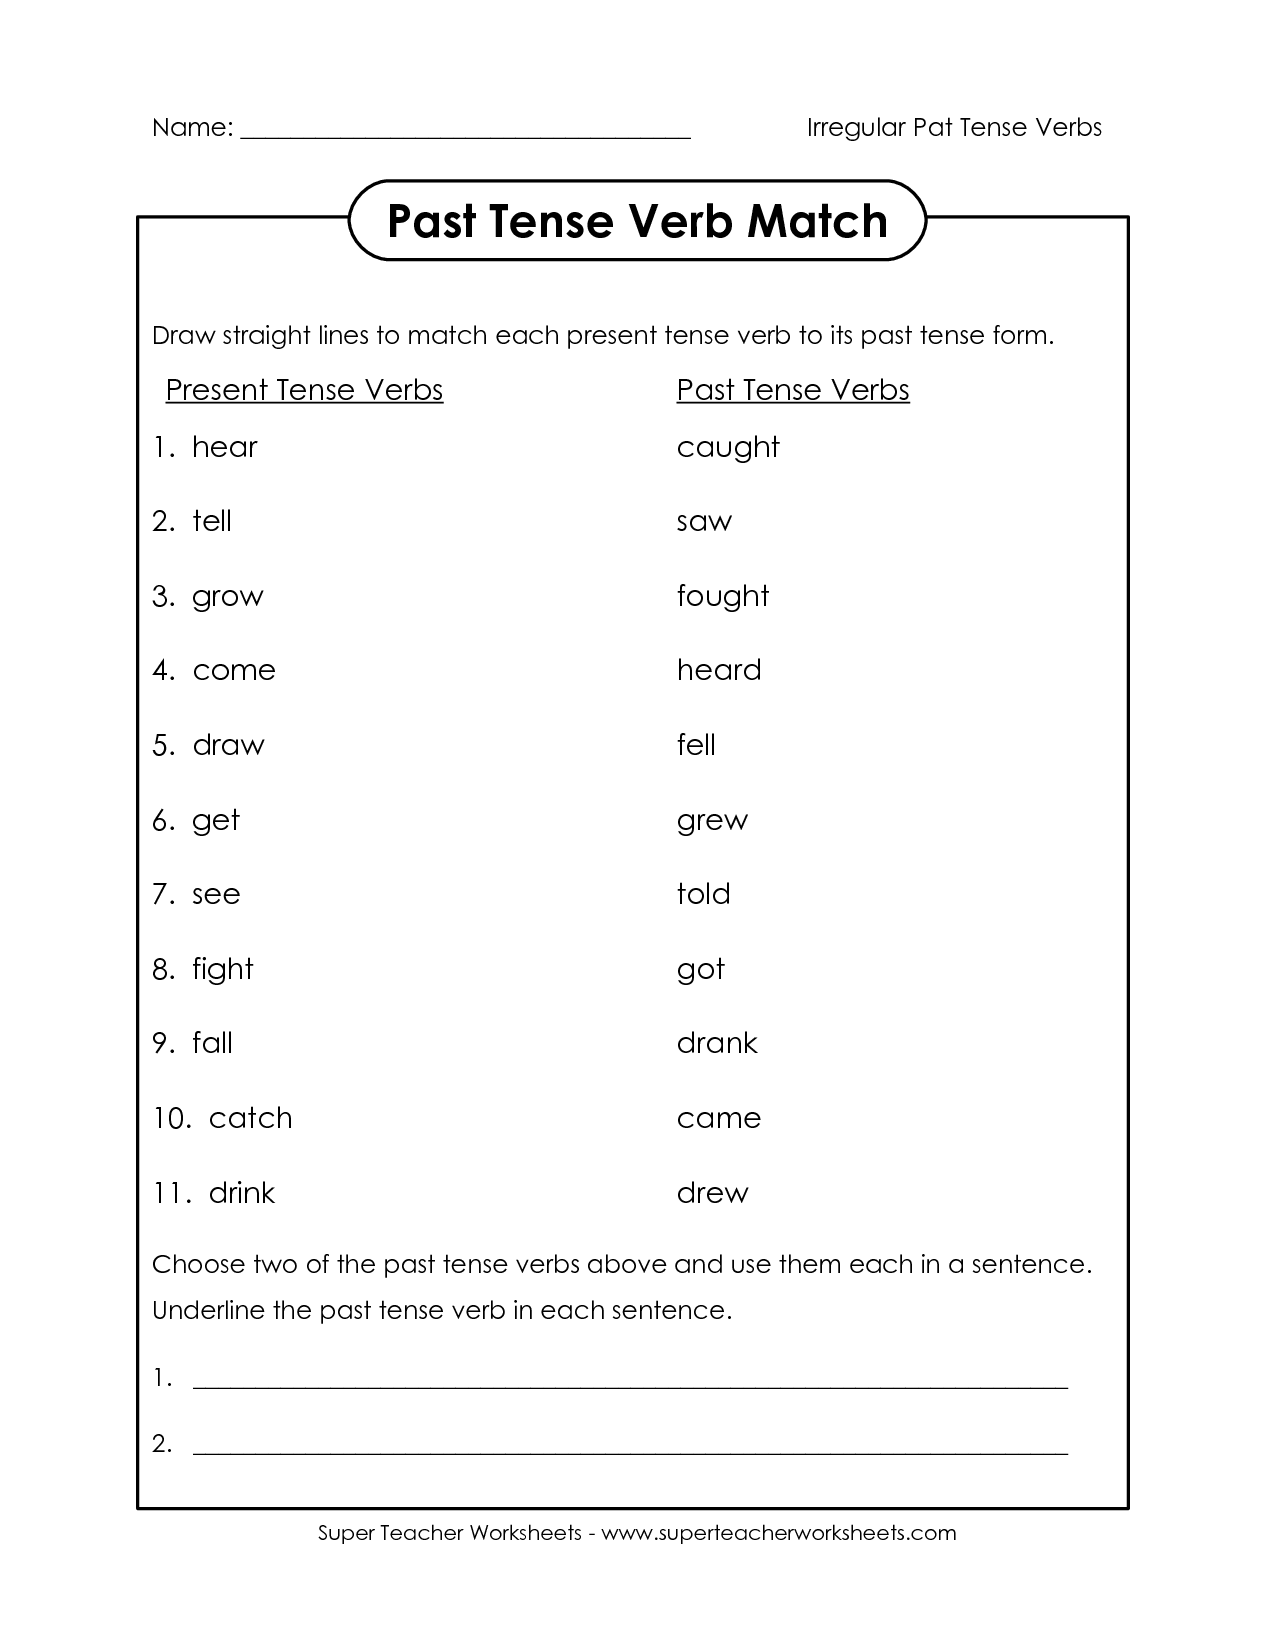 regular-past-tense-verbs-worksheet-ultimate-slp